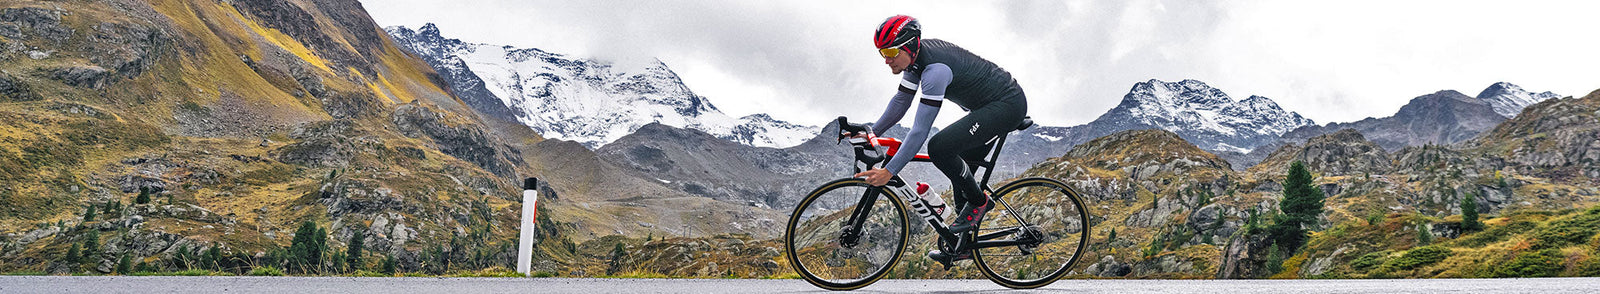 Fdx Mens Black & Grey Thermal Long Sleeve Cycling Jersey Winter Bib Tights Water Resistant Windproof Compression Socks Hi Viz Reflectors Gear UK